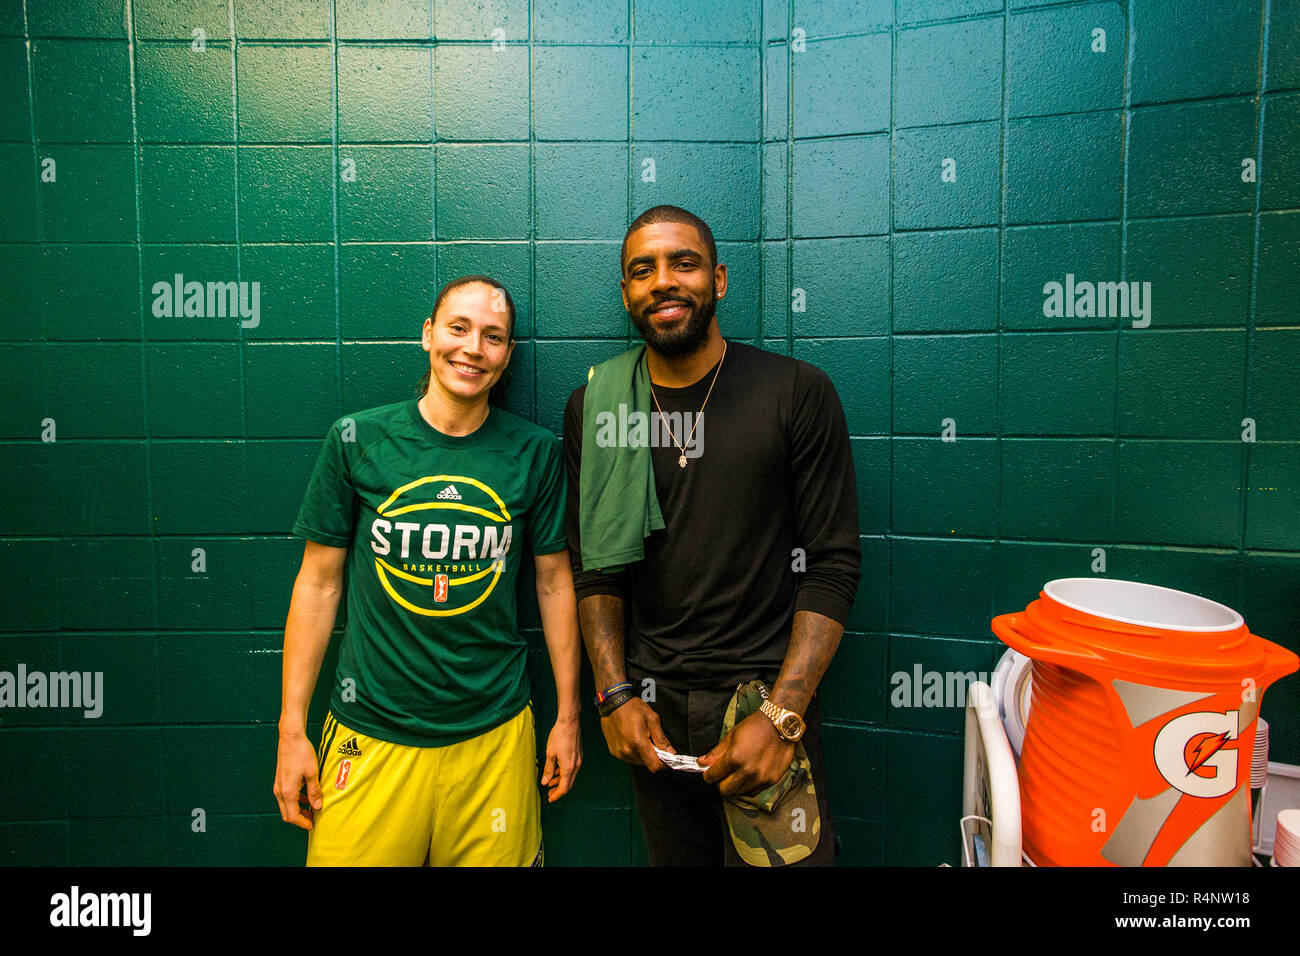 Portrait of two smiling basketball players, Seattle, Washington State, USA Stock Photo